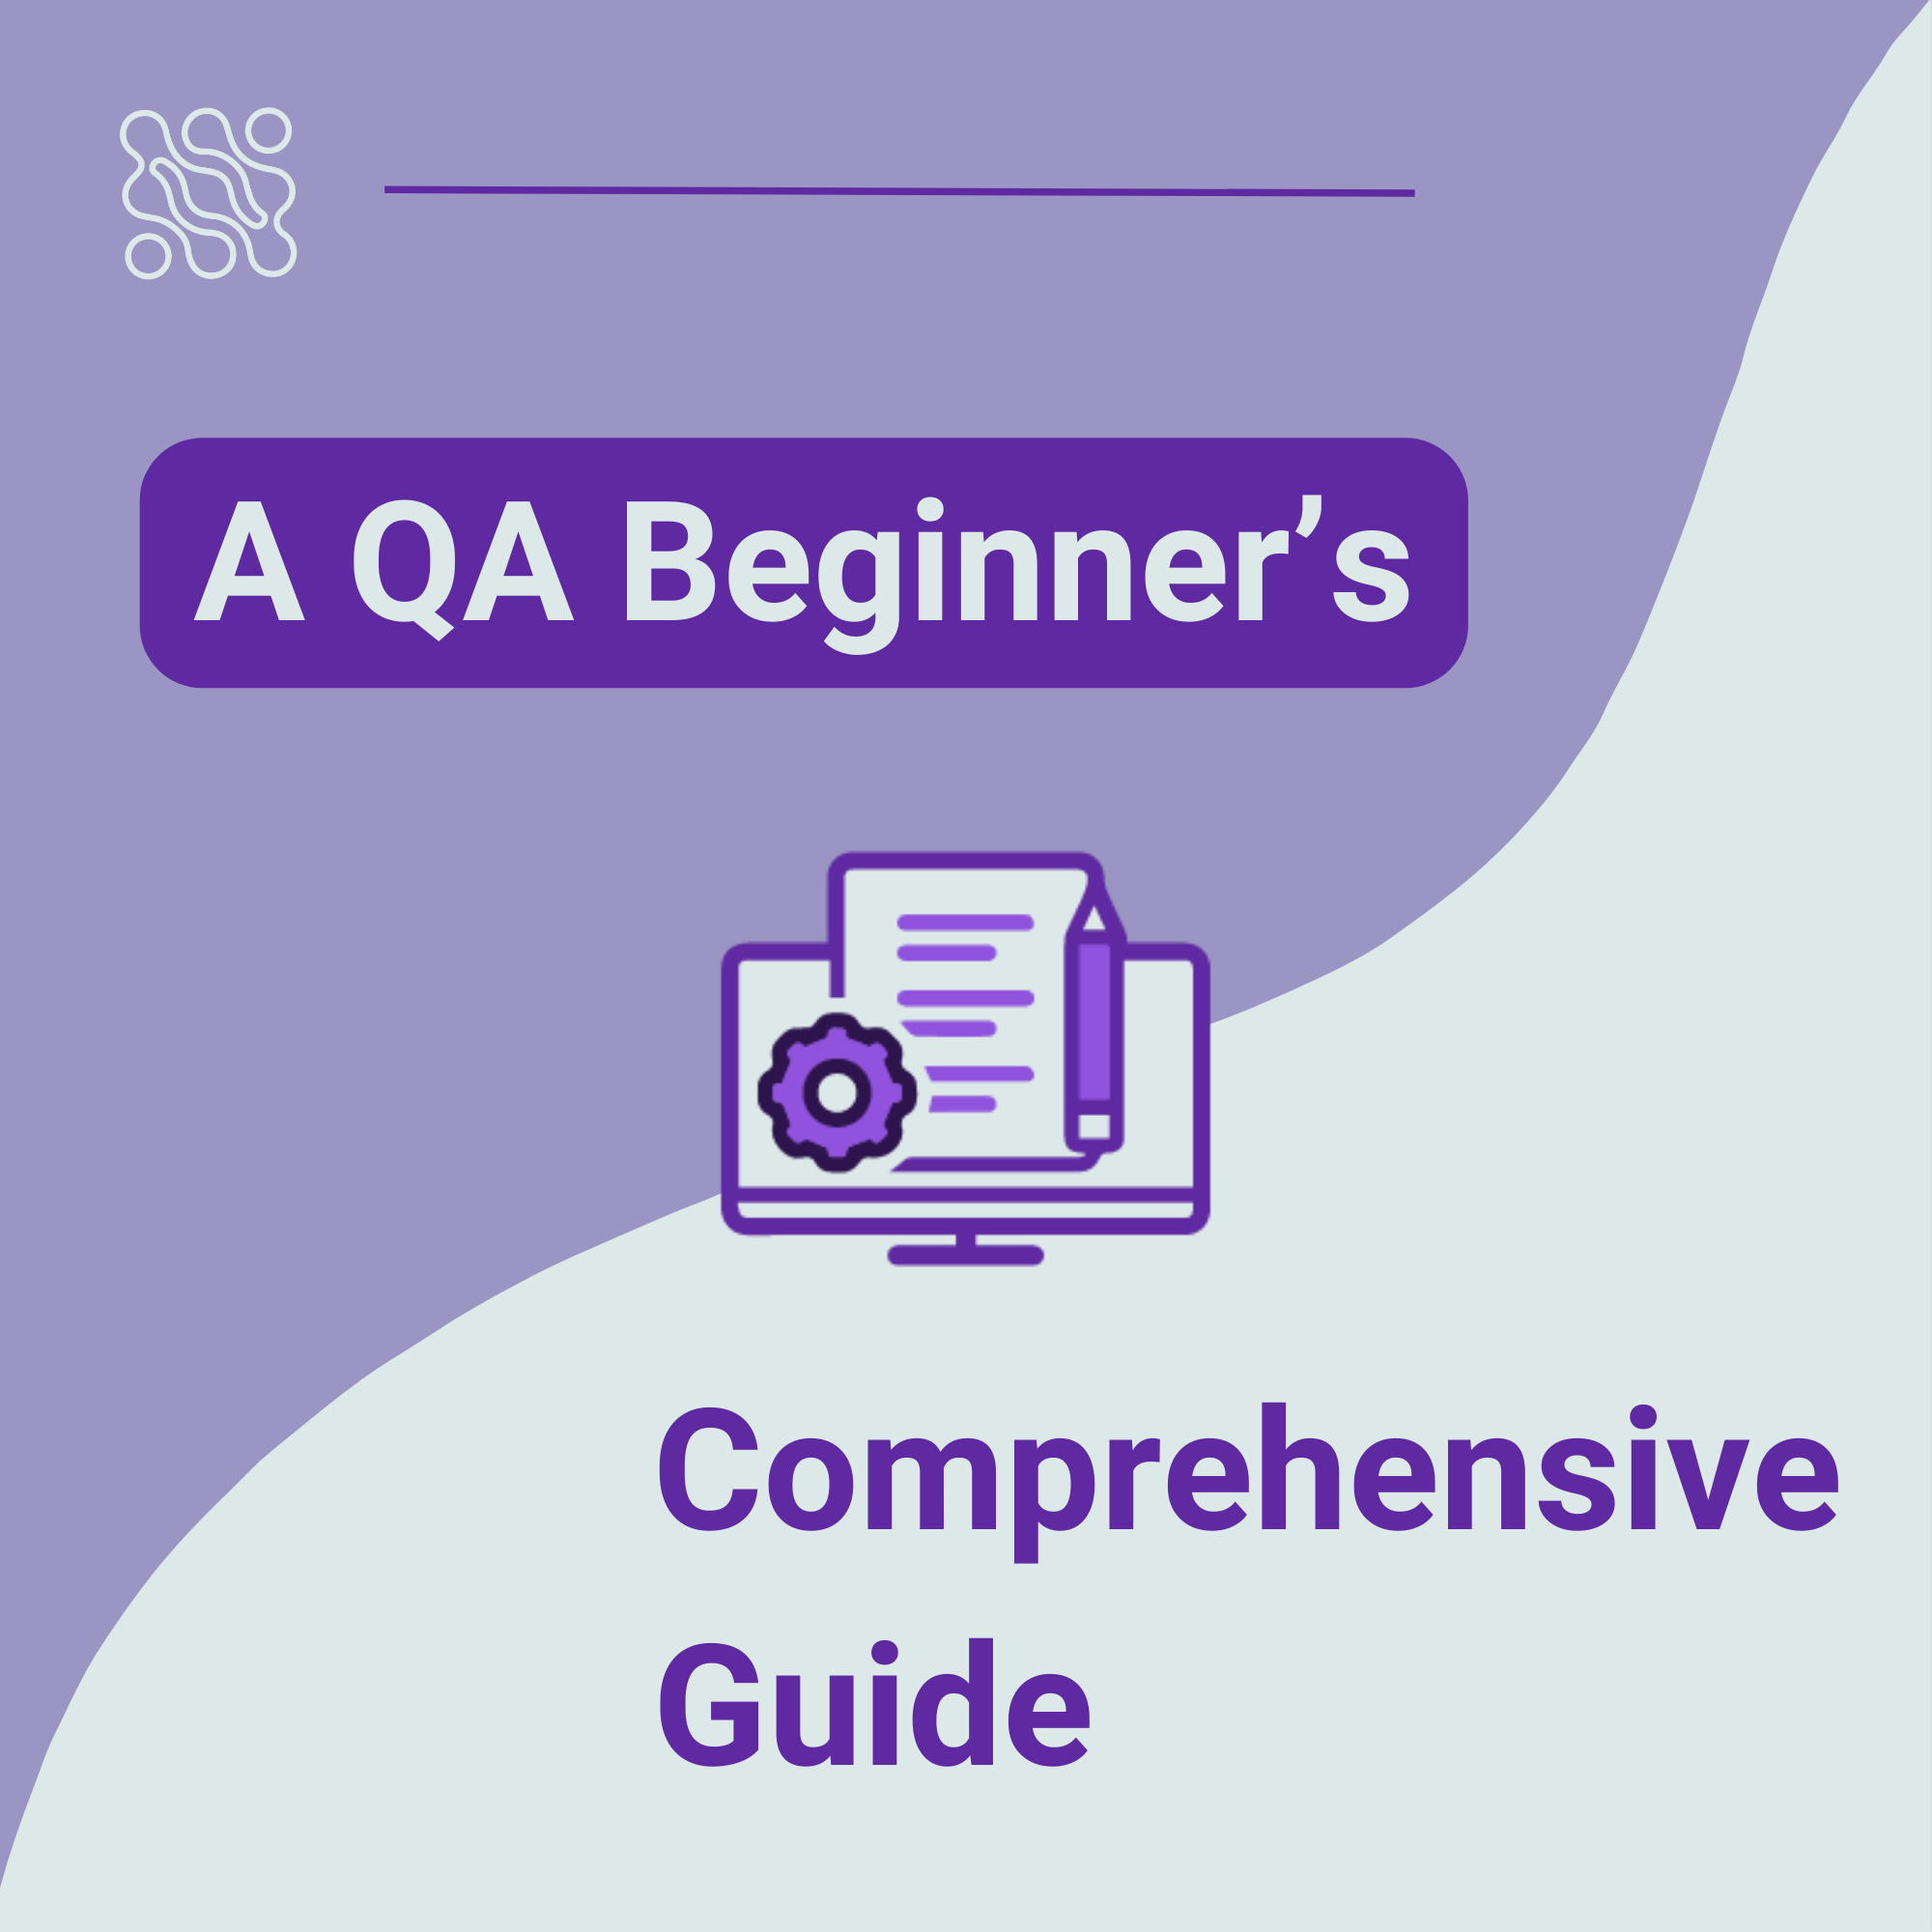 A QA Beginner's Comprehensive Guide